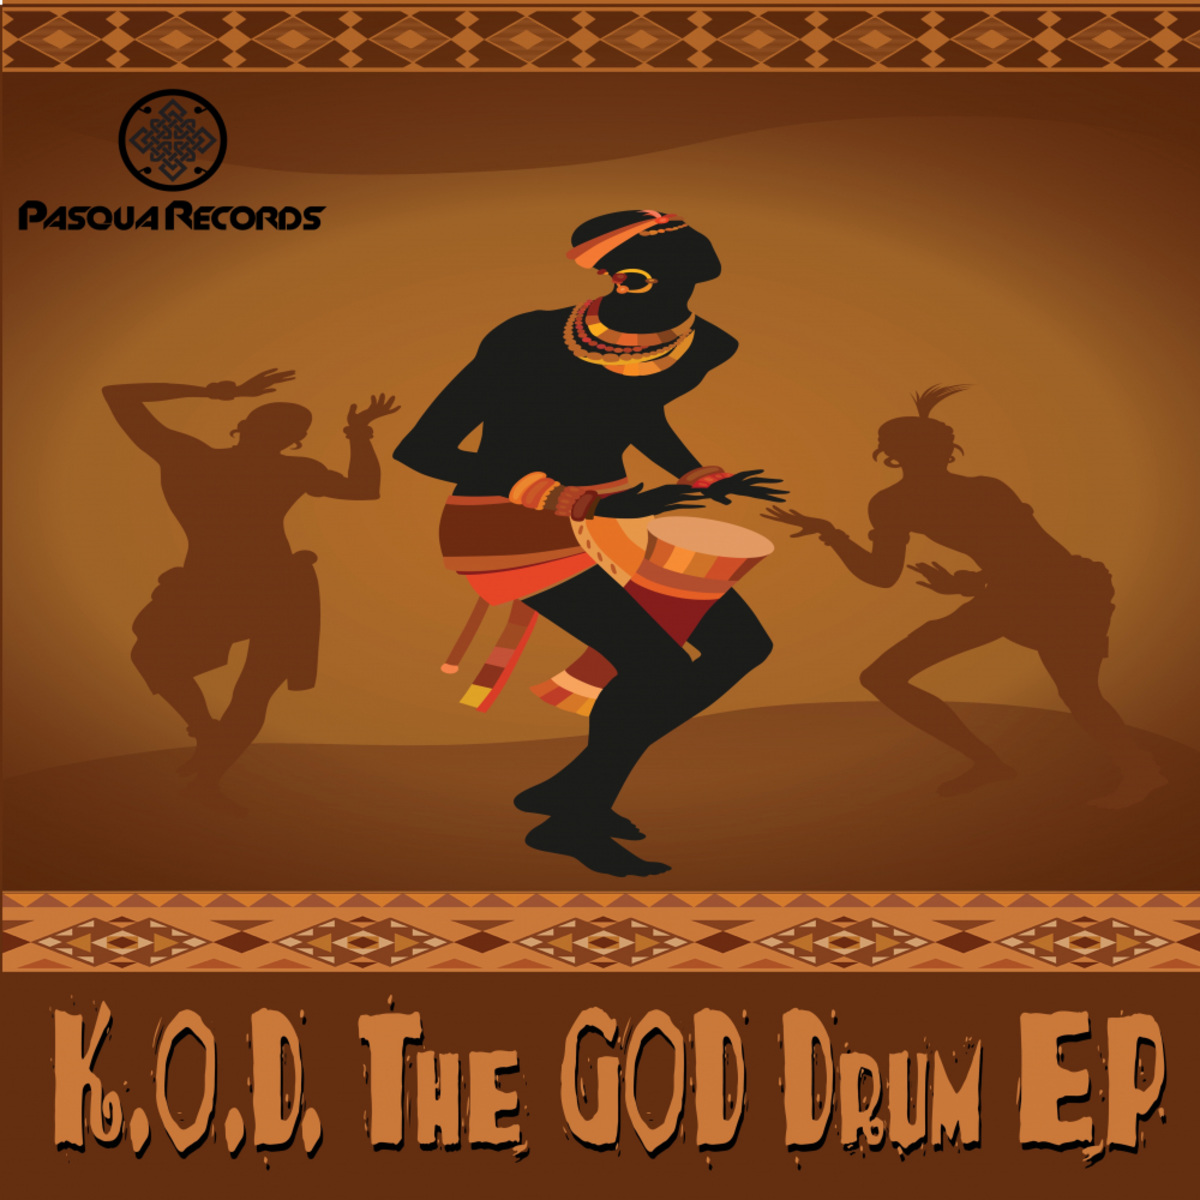 K.O.D - The God Drum / Pasqua Records